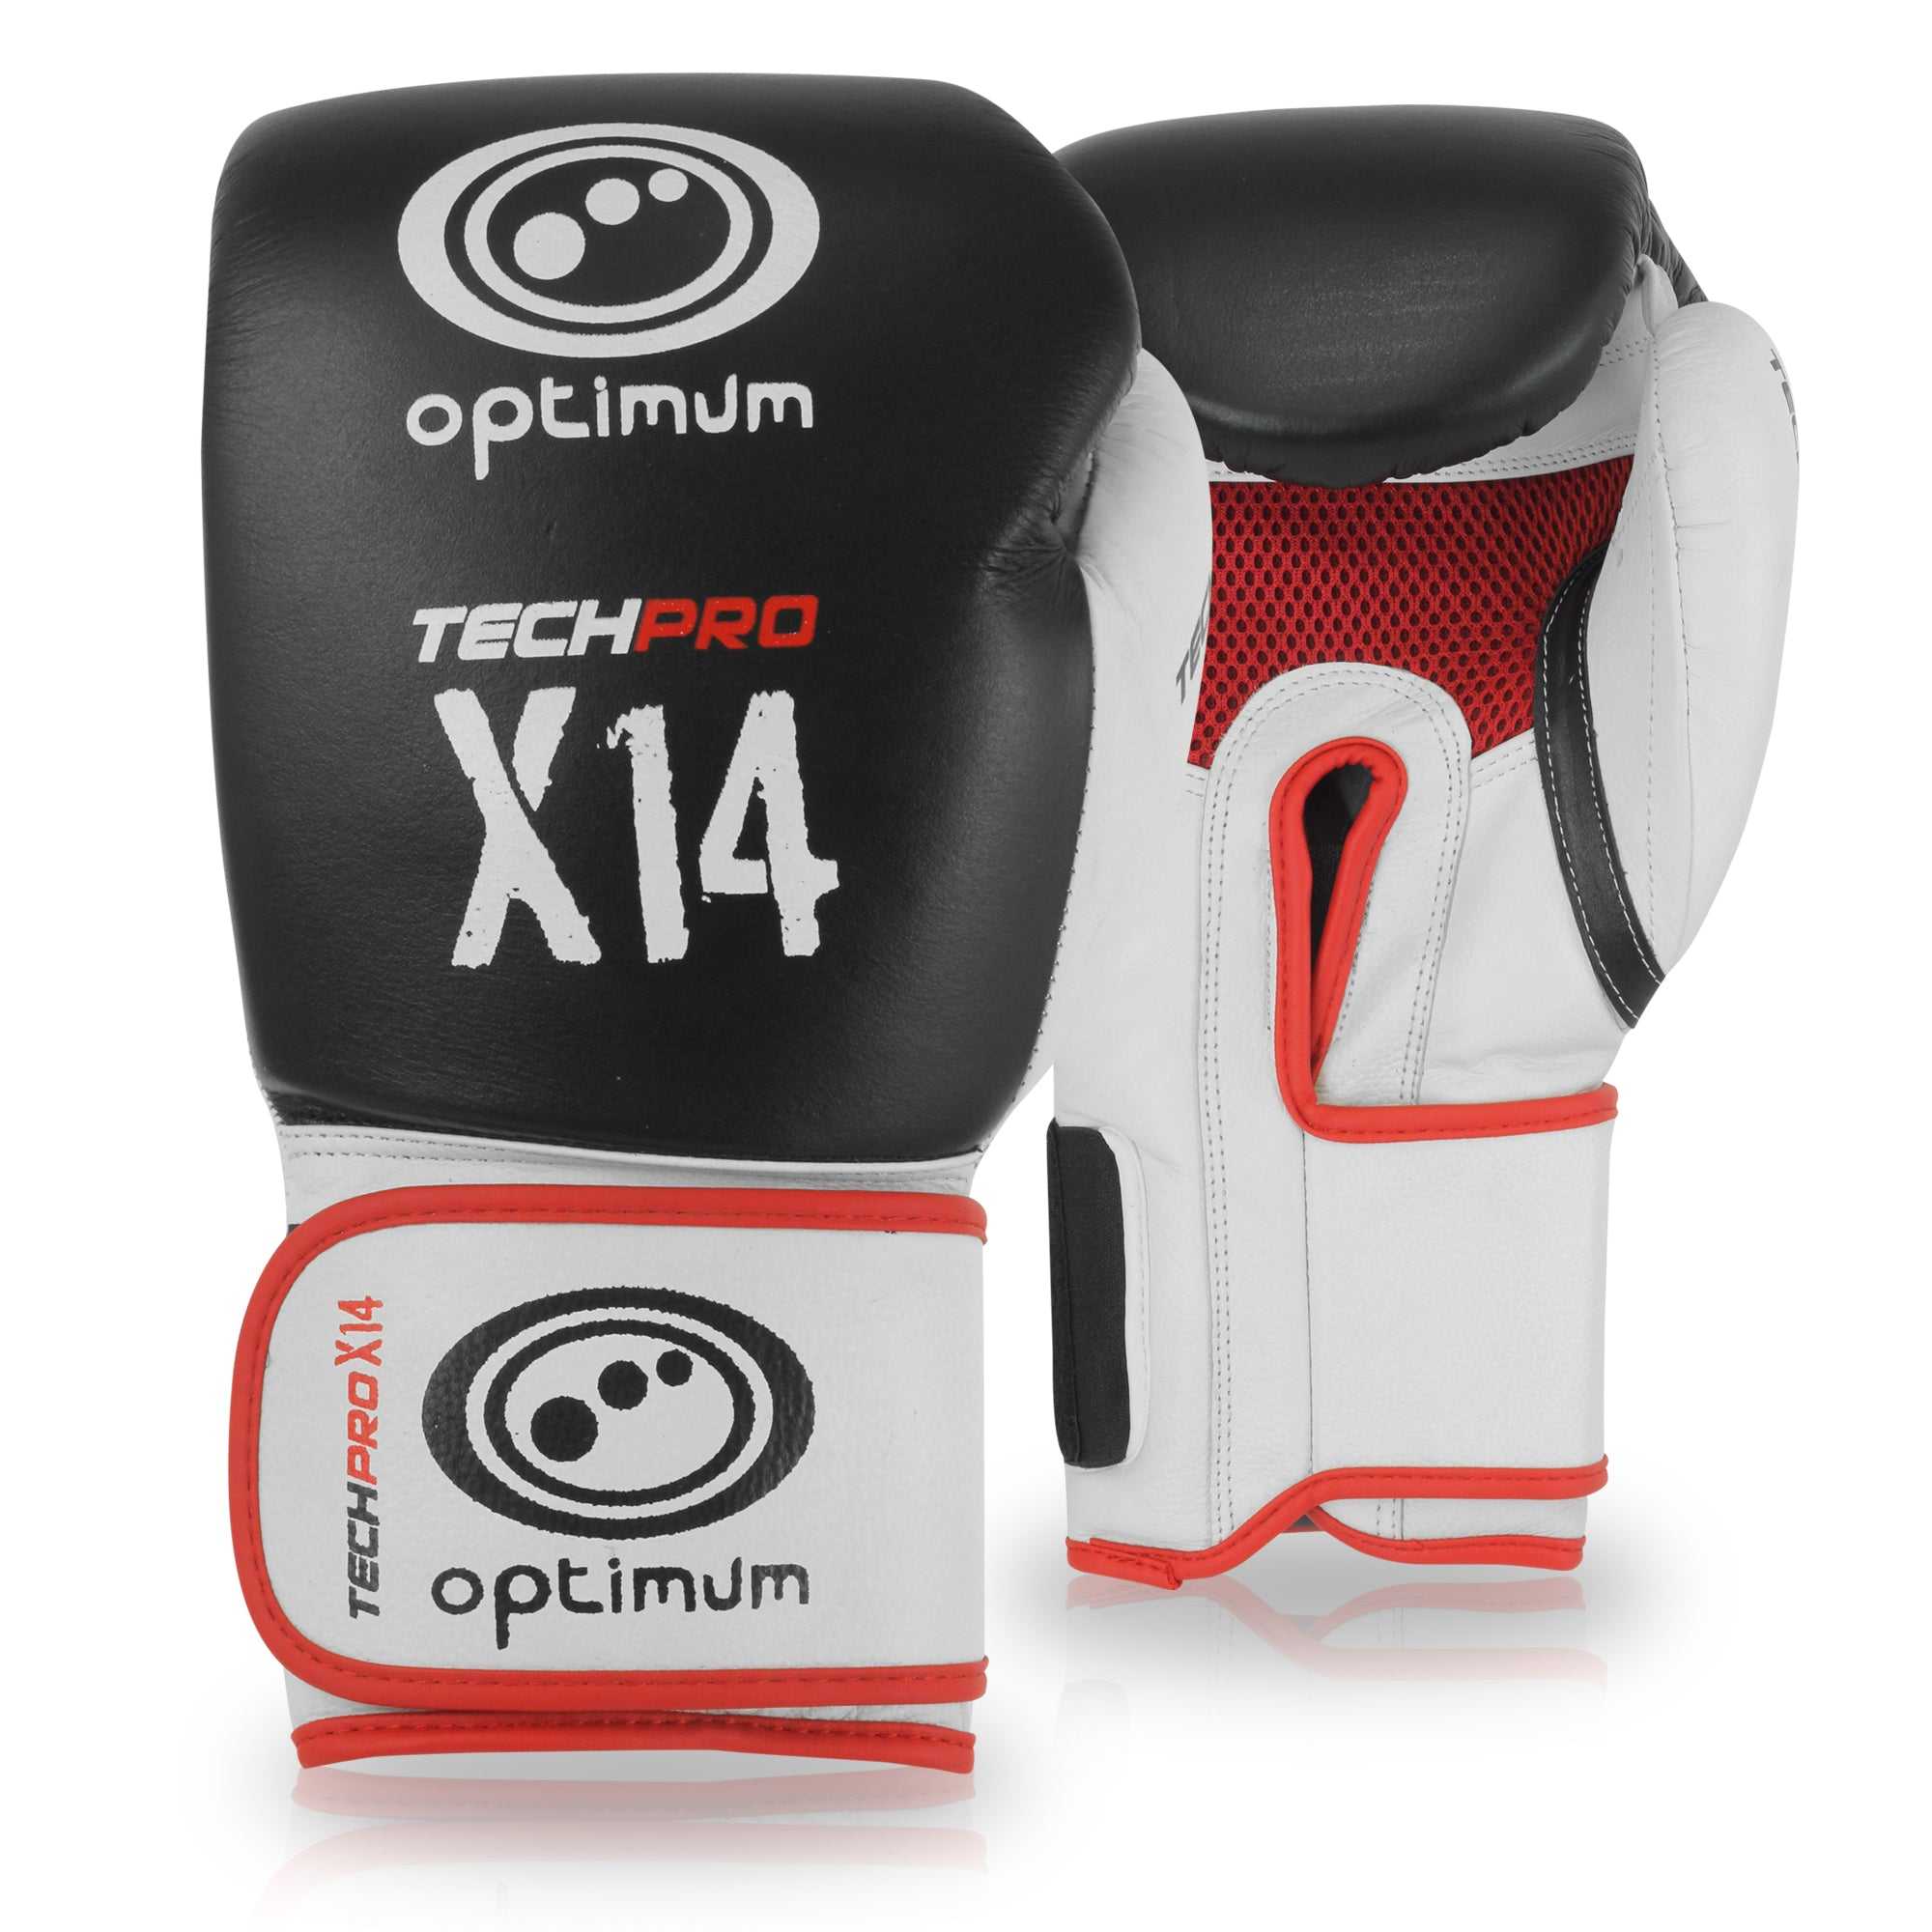 Techpro X14 Boxing Gloves - Optimum